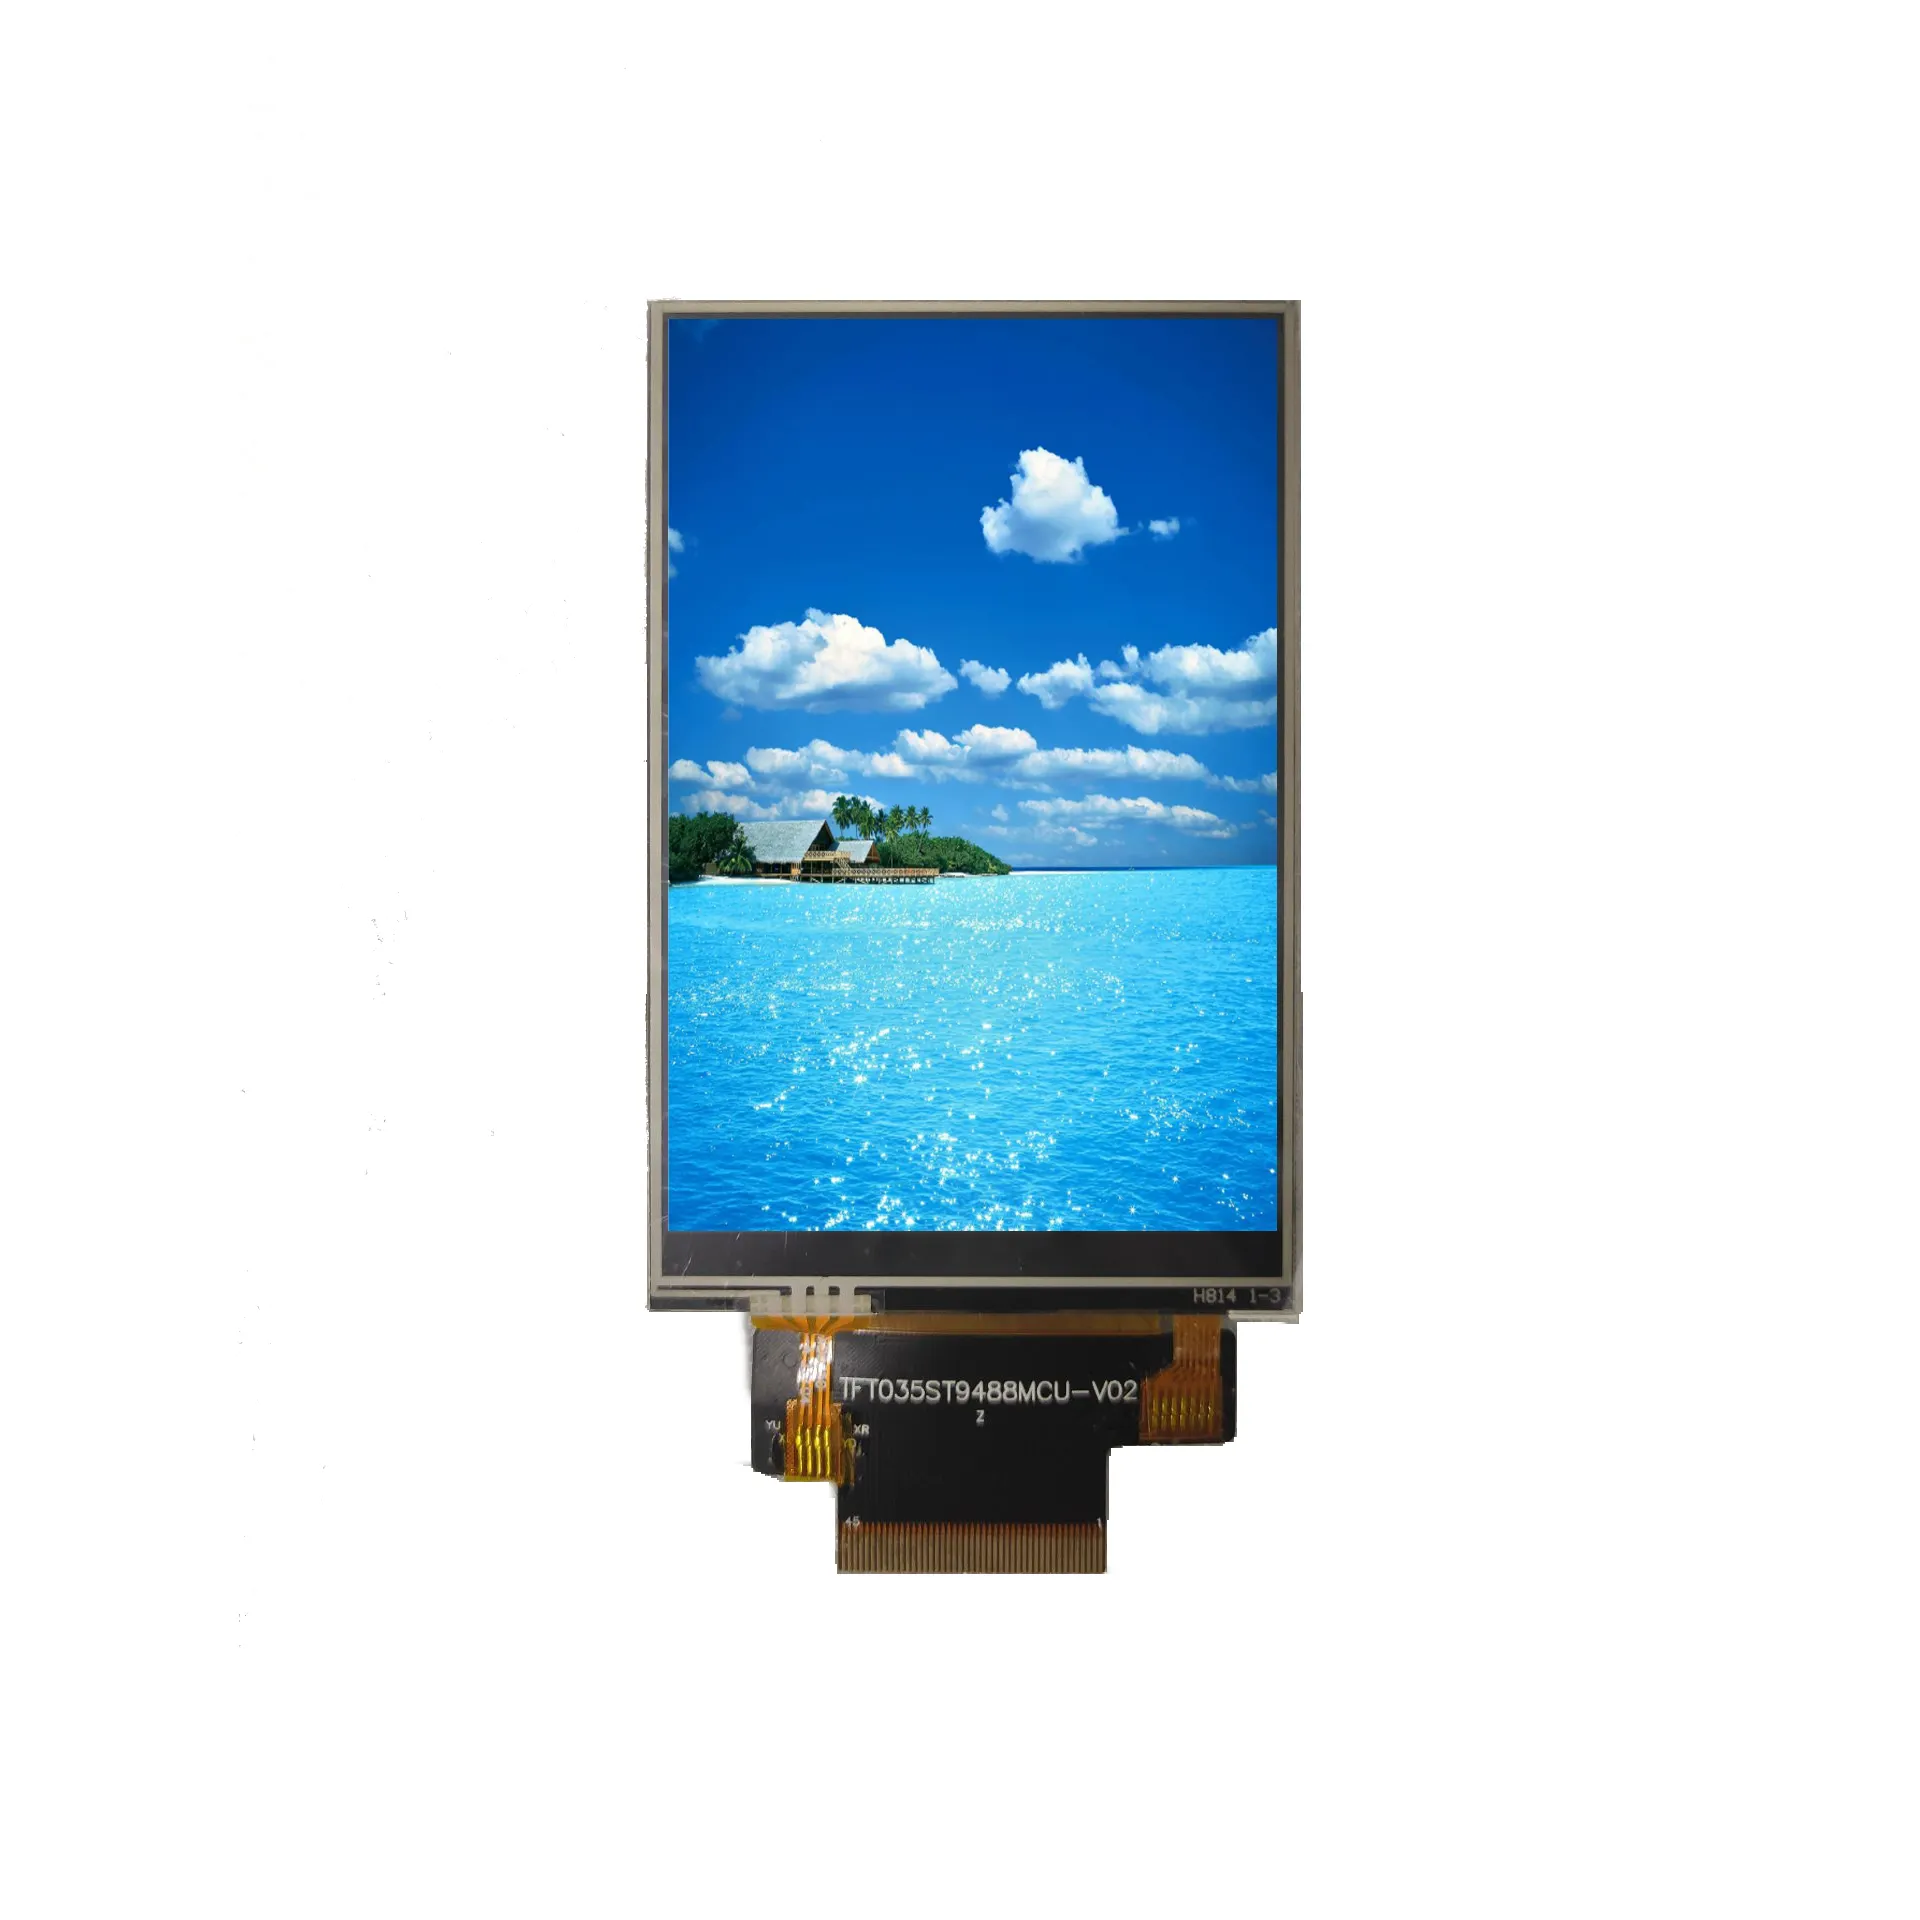 3,5-Zoll-Bildschirm 320x480 Punkte TFT LCD ILI9488L mit MCU-Schnitts telle mit resistivem Touchscreen